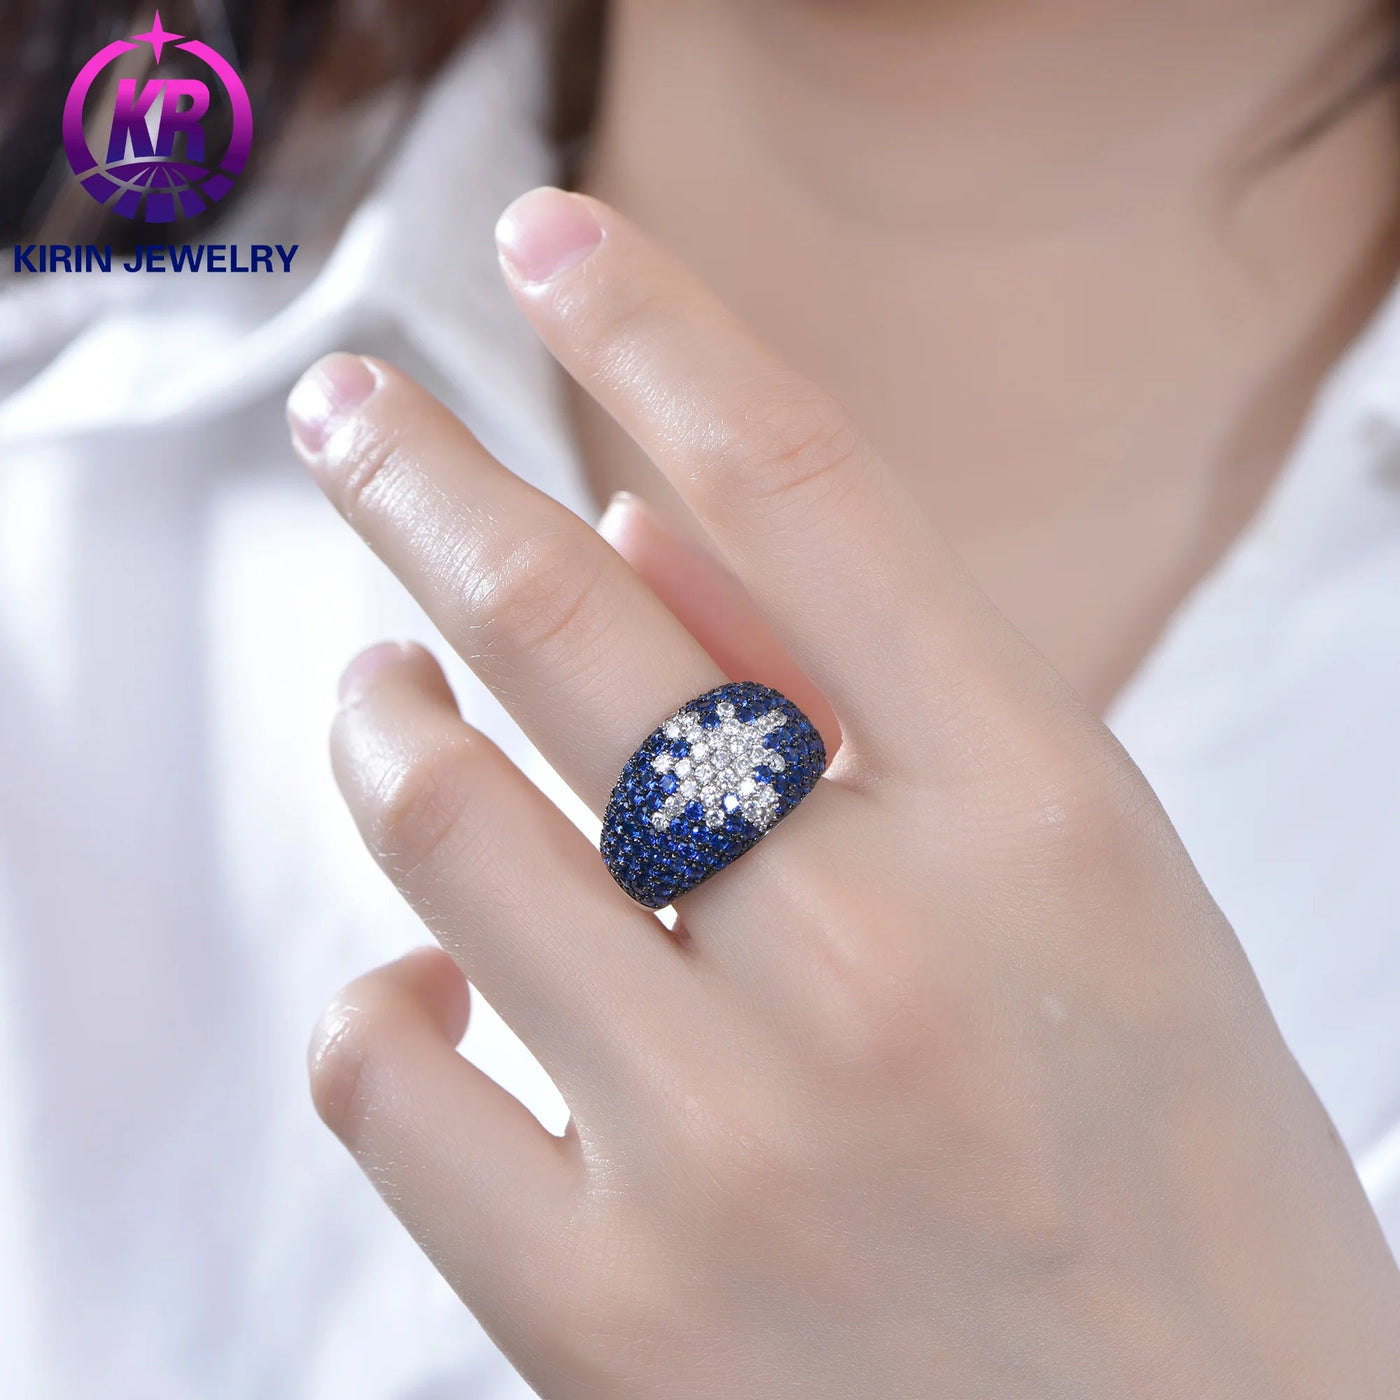 Custom Jewelry Fine Jewelry Rings for Women Jewelry Blue Spinel S925 Sterling Silver Engagement Wedding Ring Kirin Jewelry